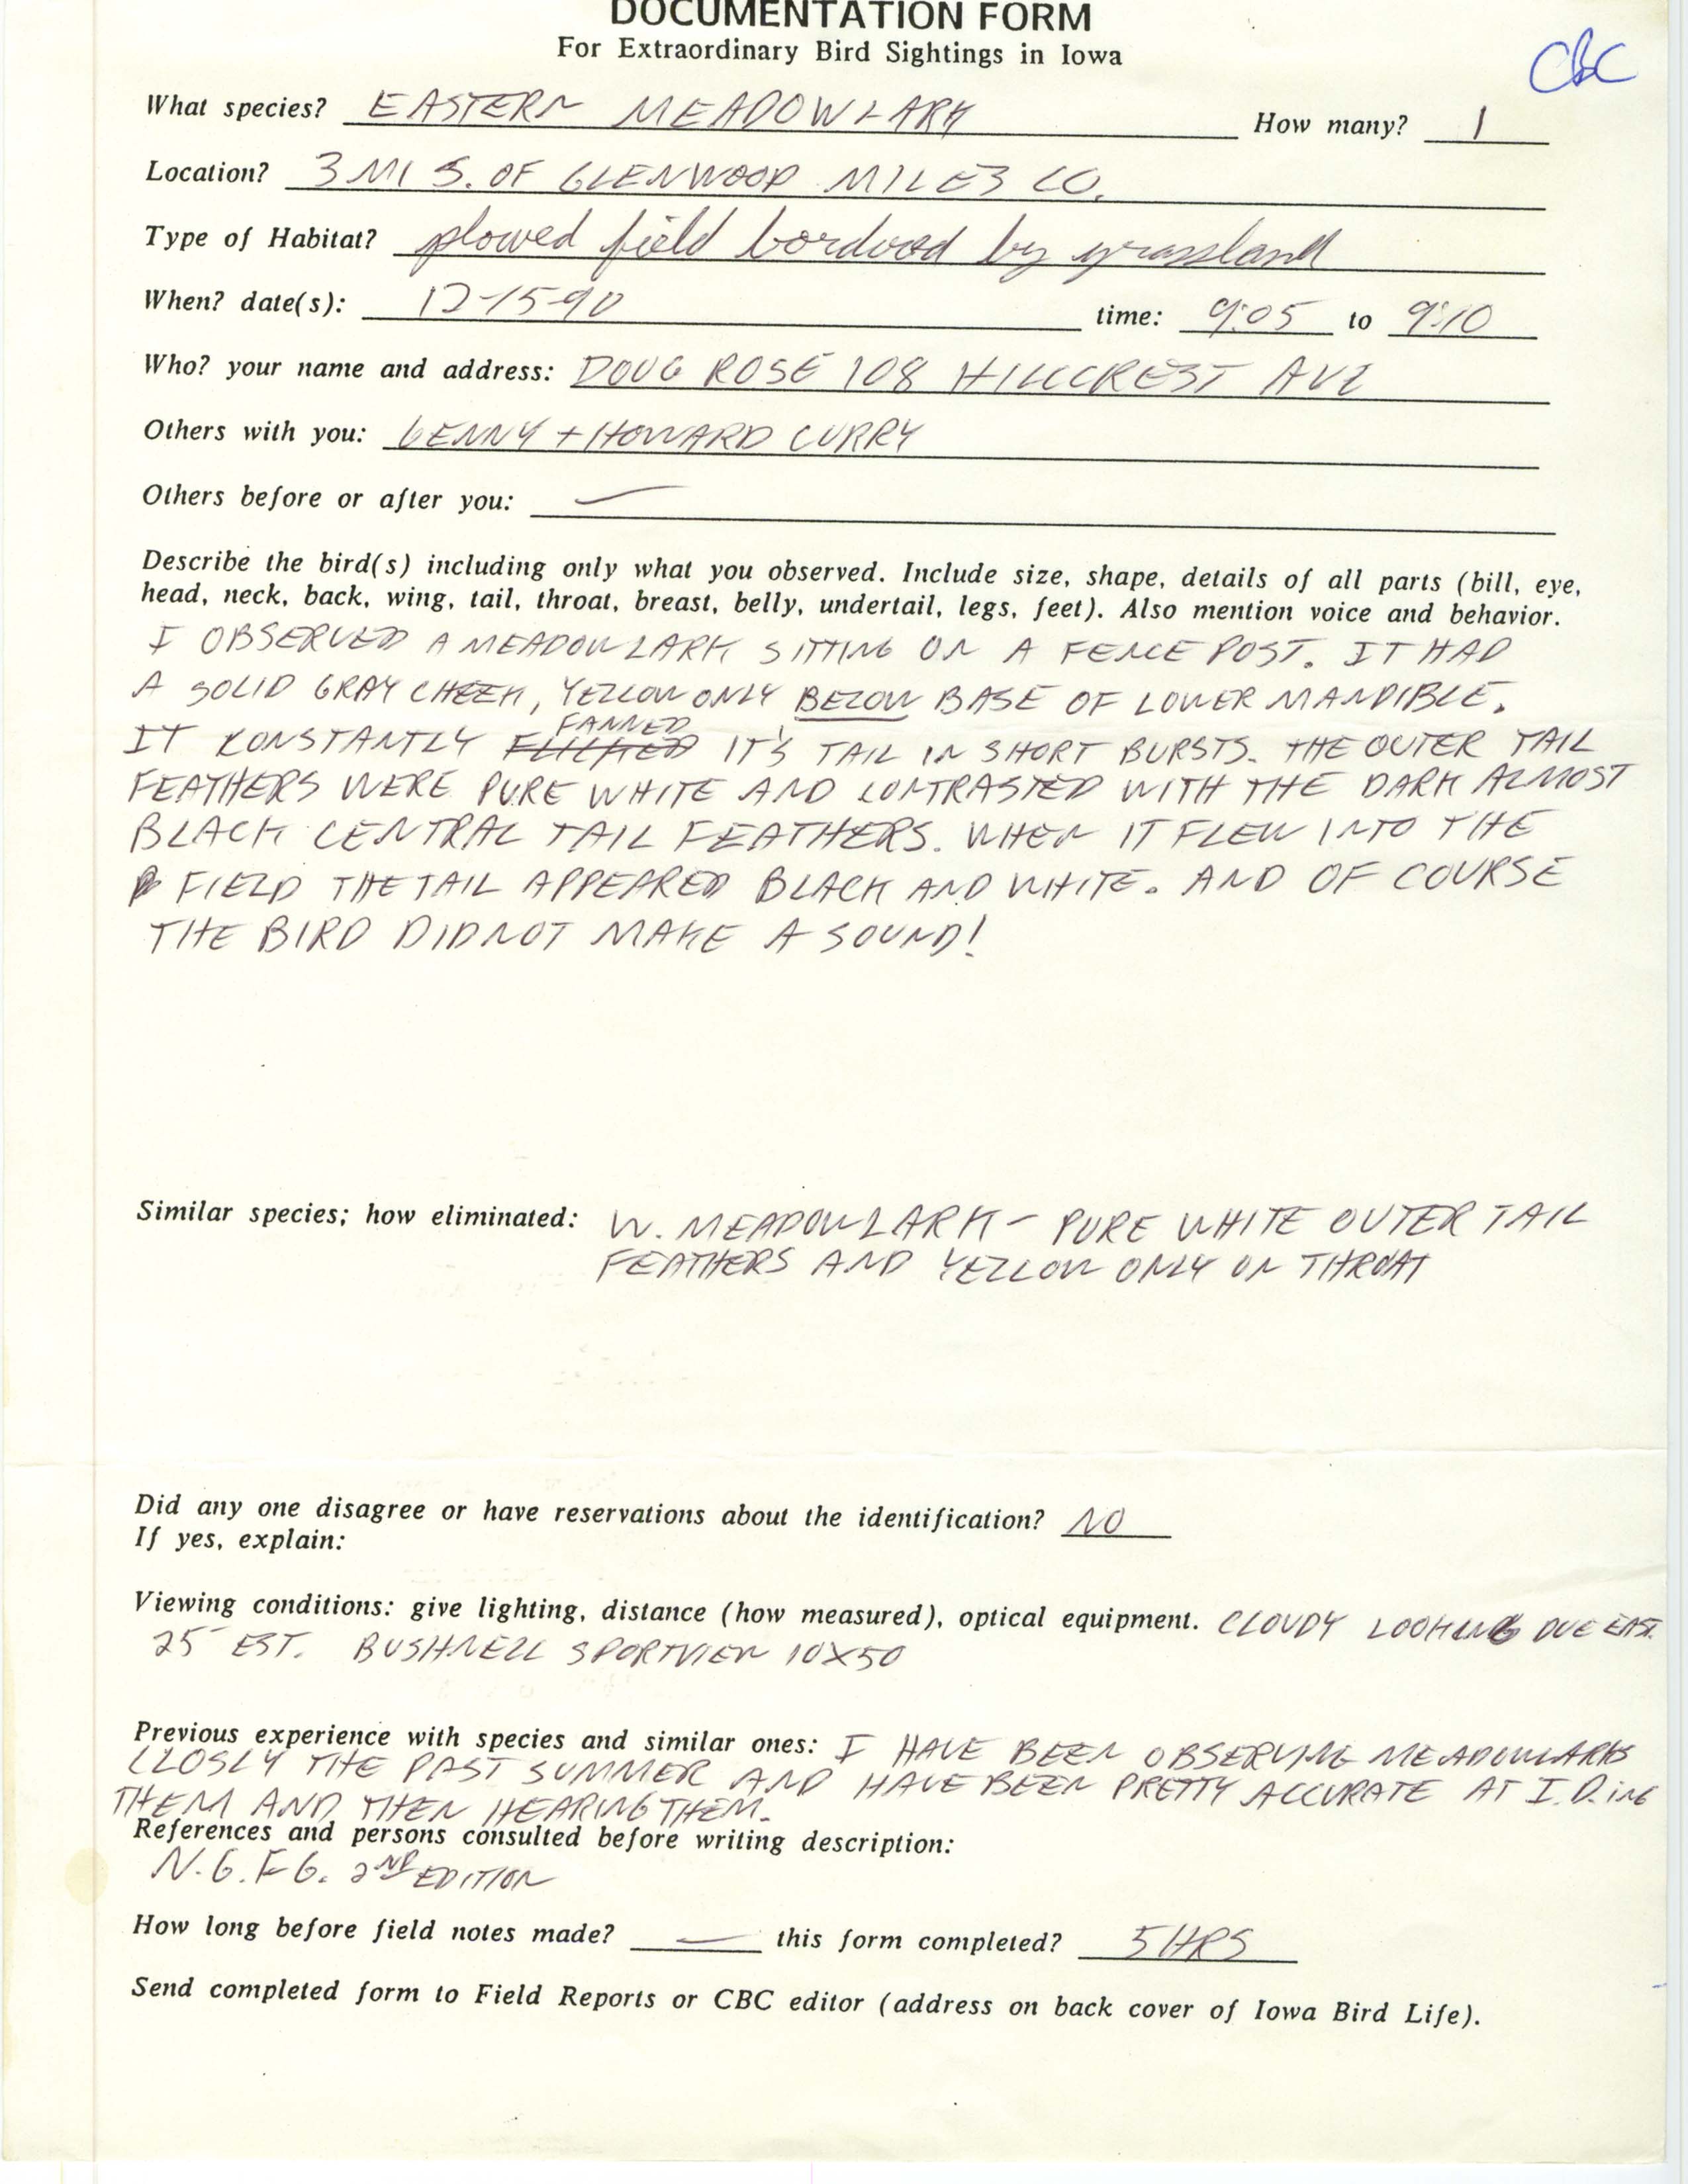 Rare bird documentation form for Eastern Meadowlark south of Glenwood, 1990